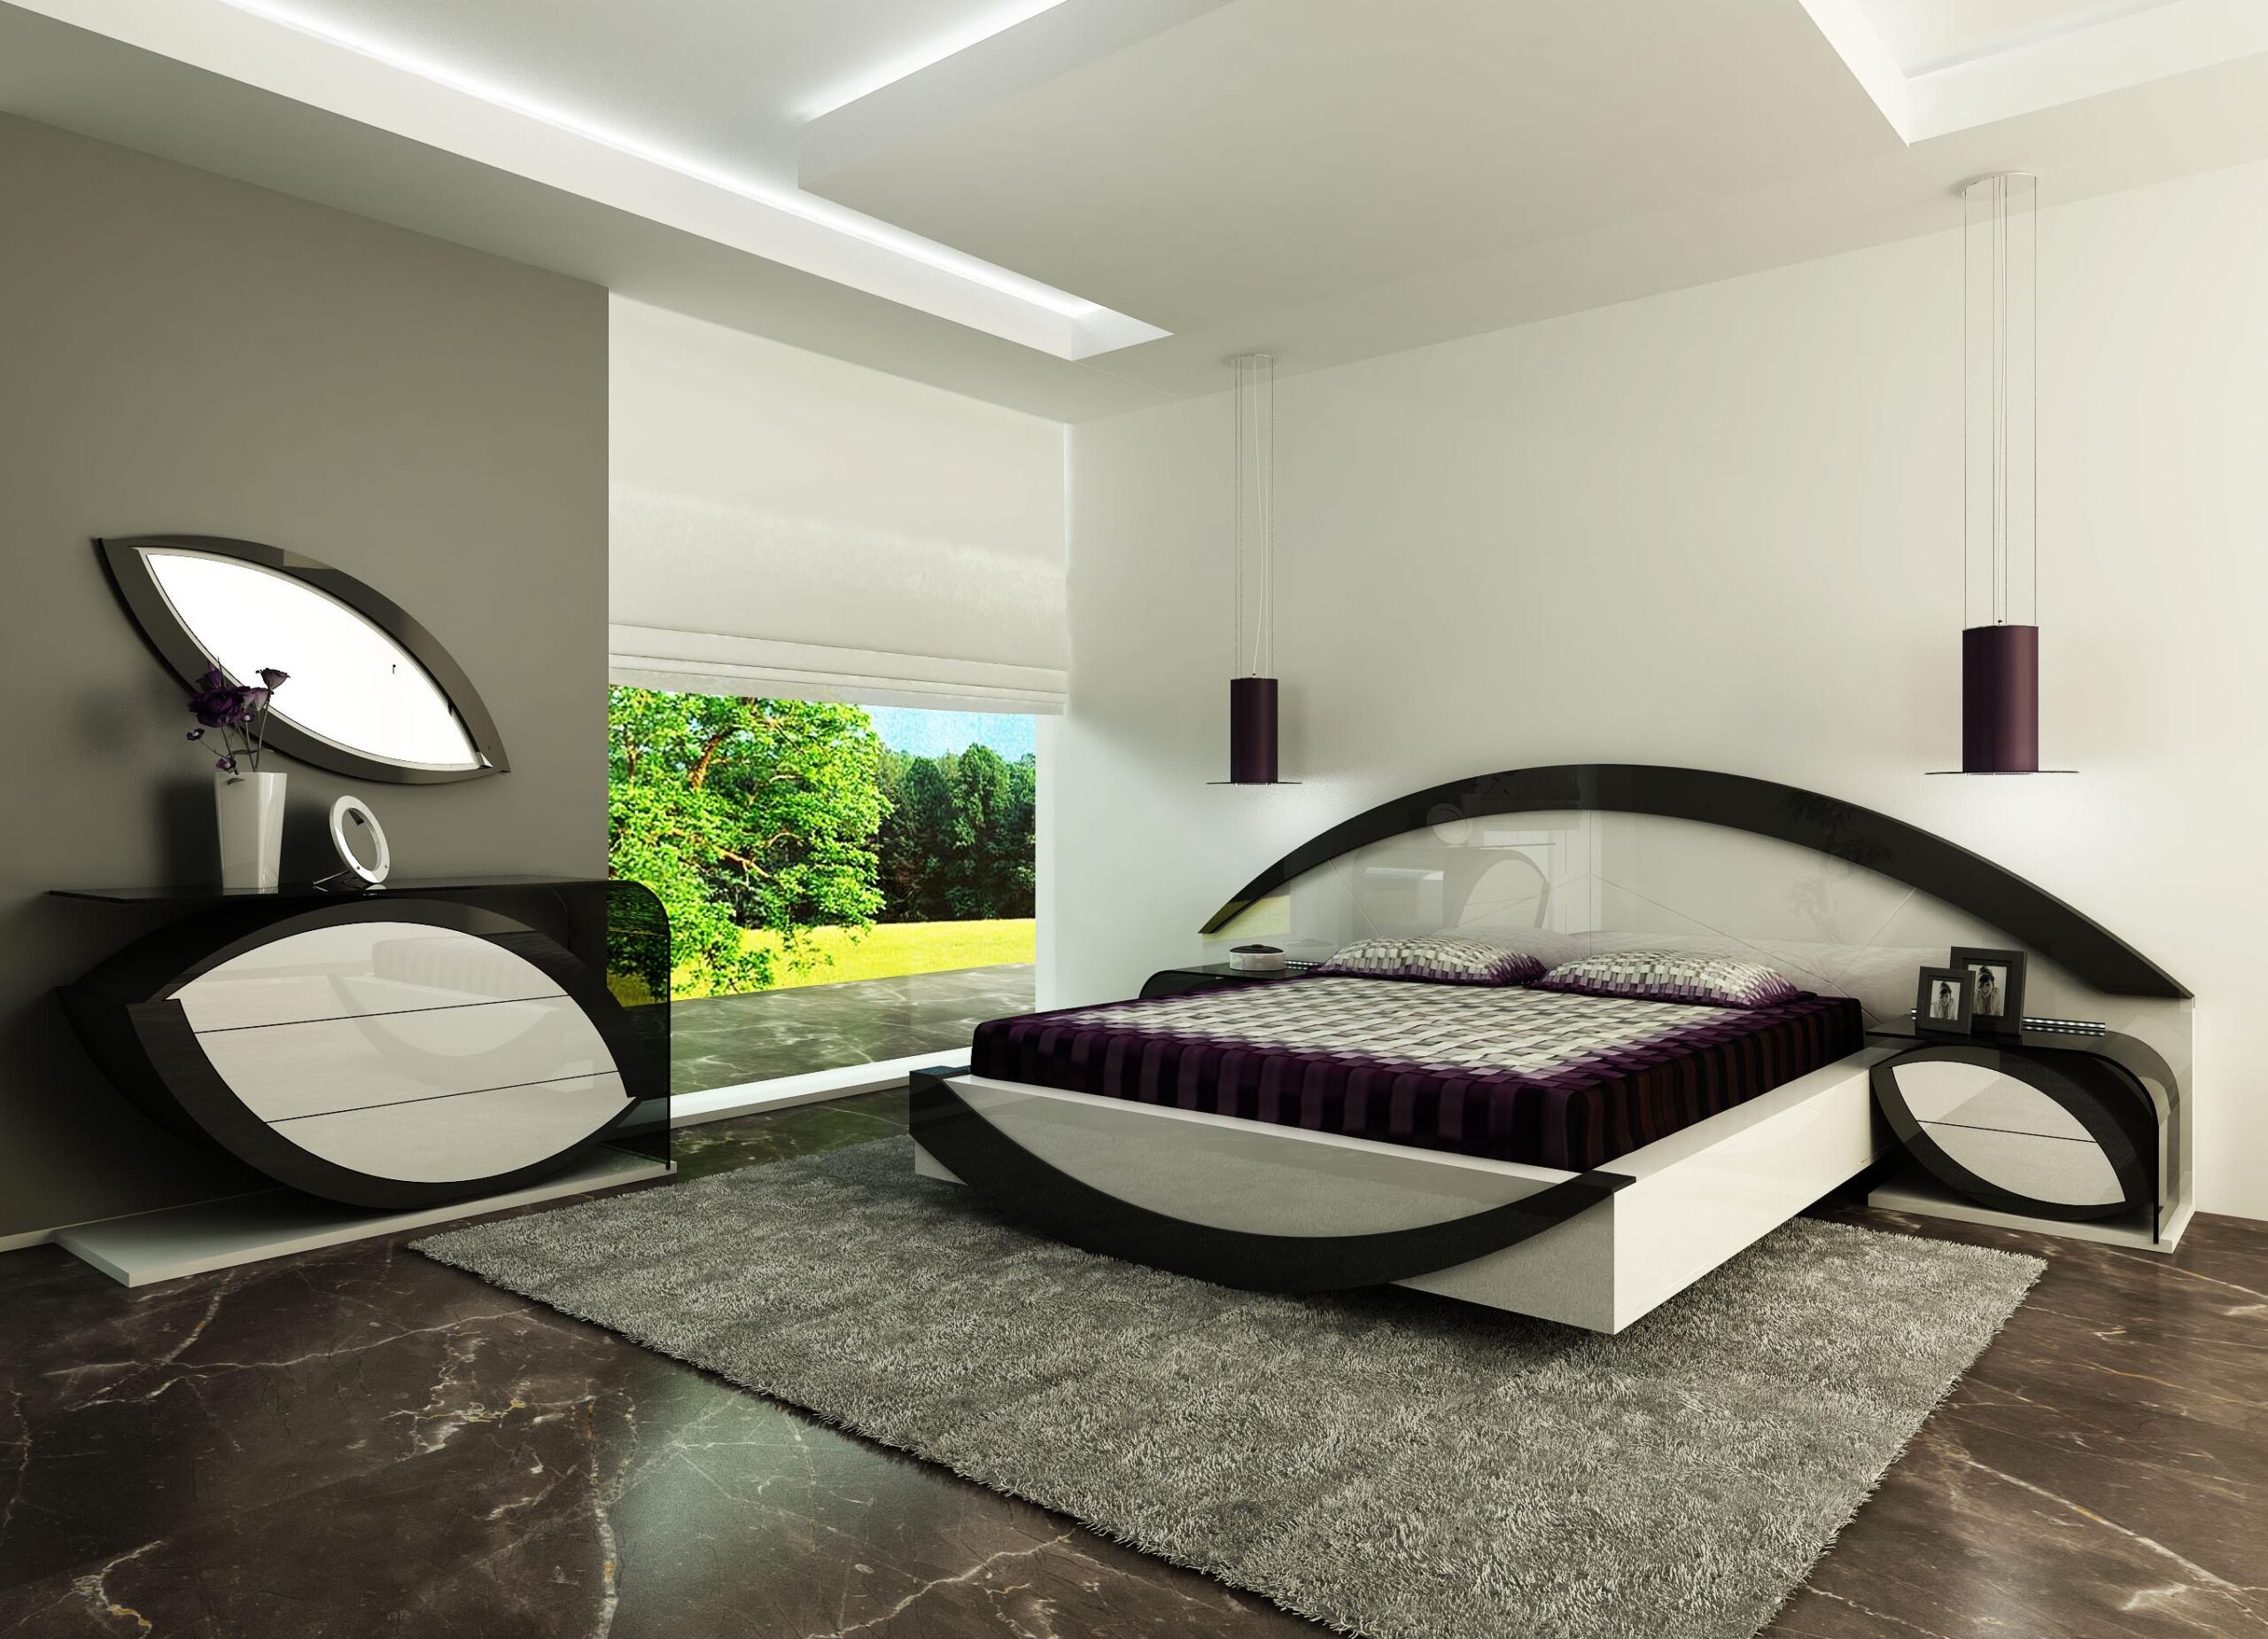  Desain  Unik  Furnitur Kamar  Tidur  Modern Thegorbalsla